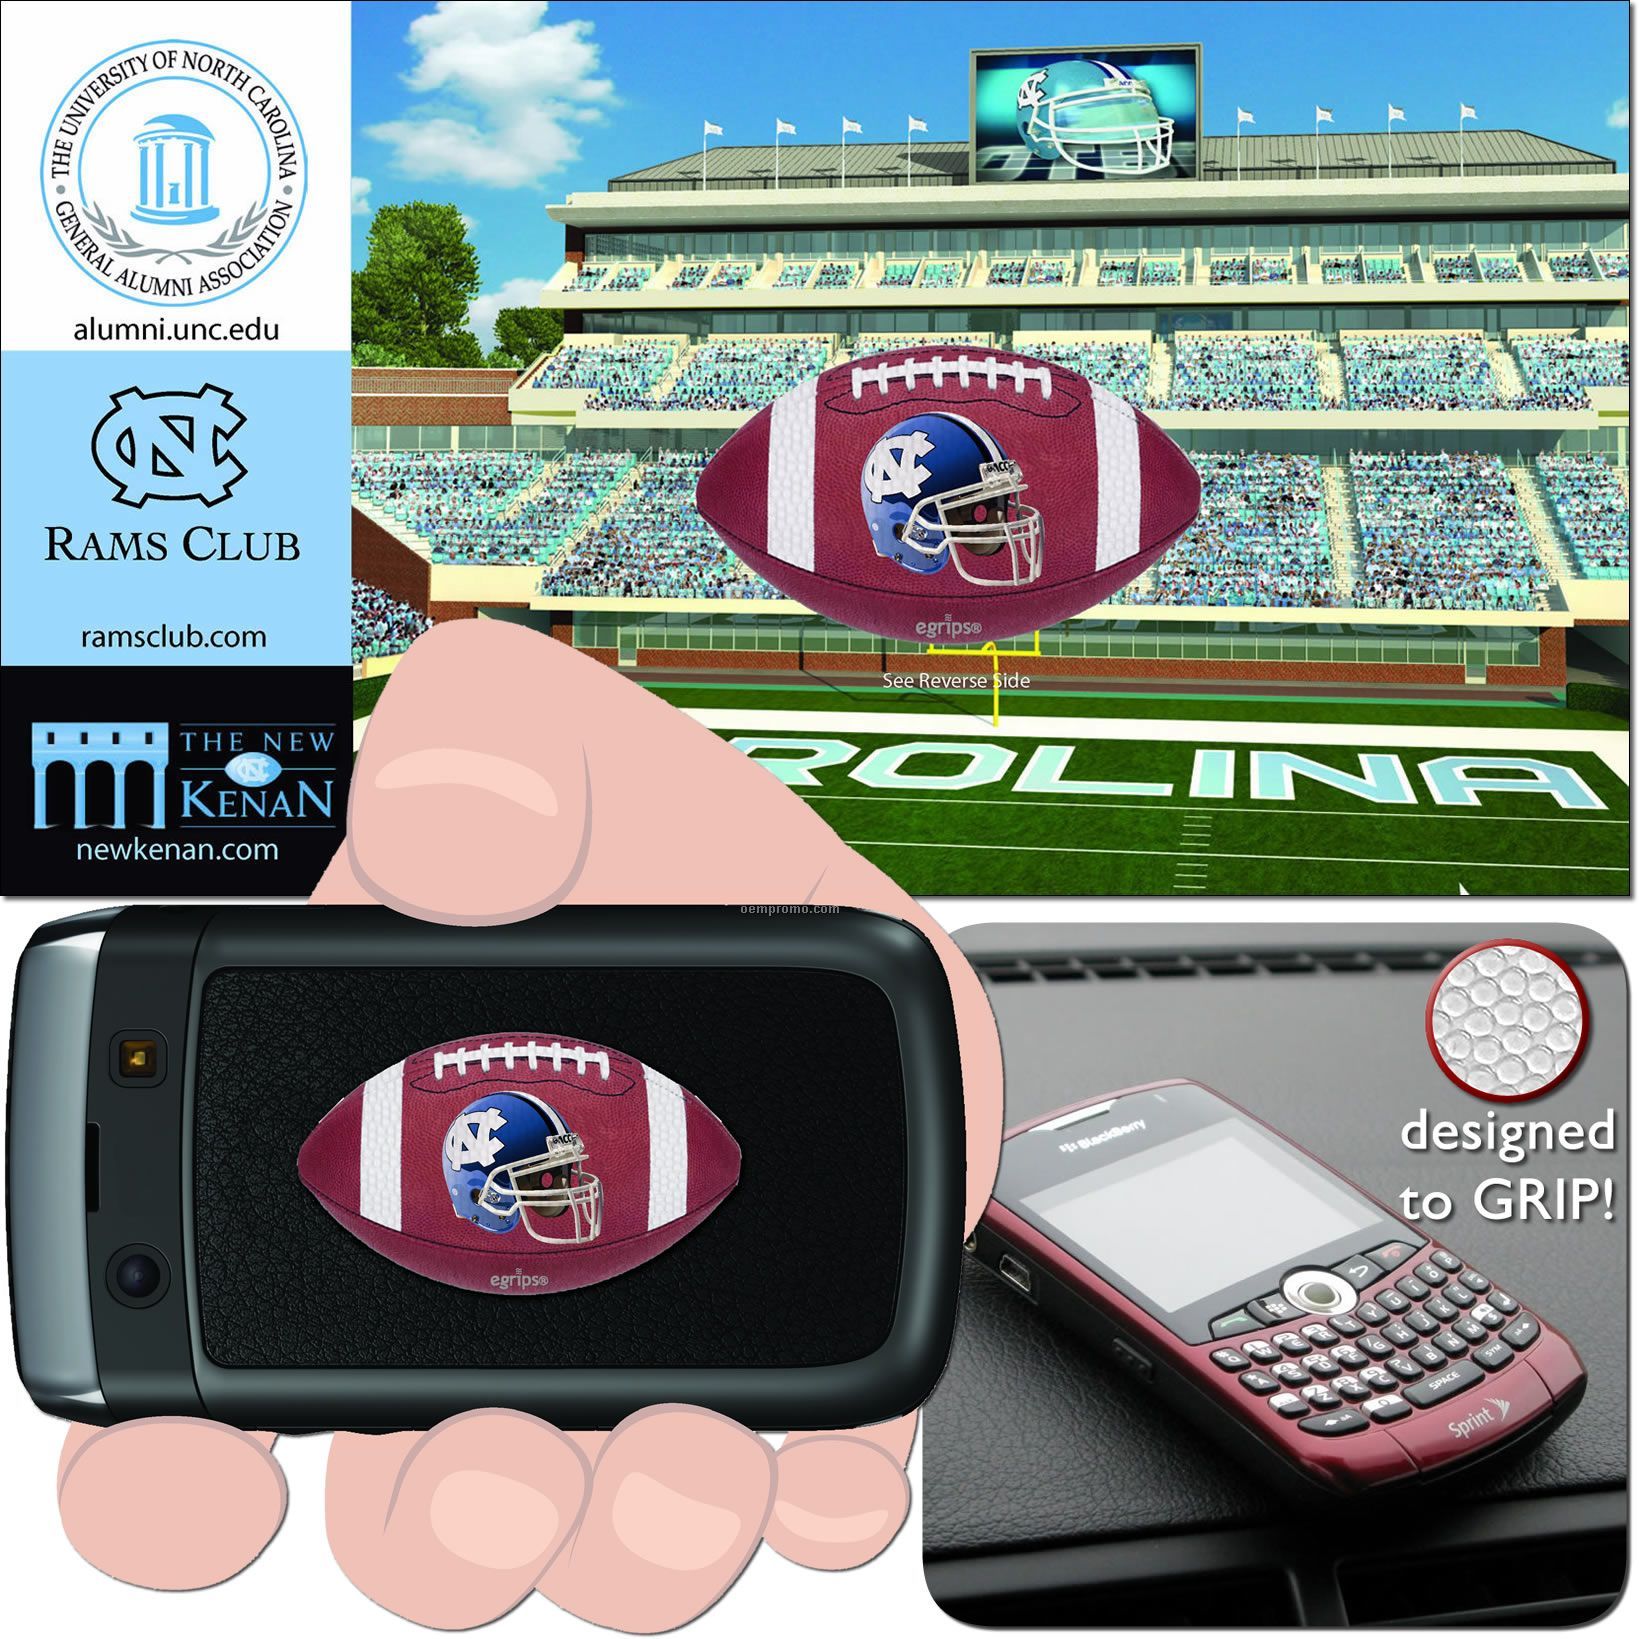 Egrips Non-slip Football + Marketing Card (The Cell Phone Grip)